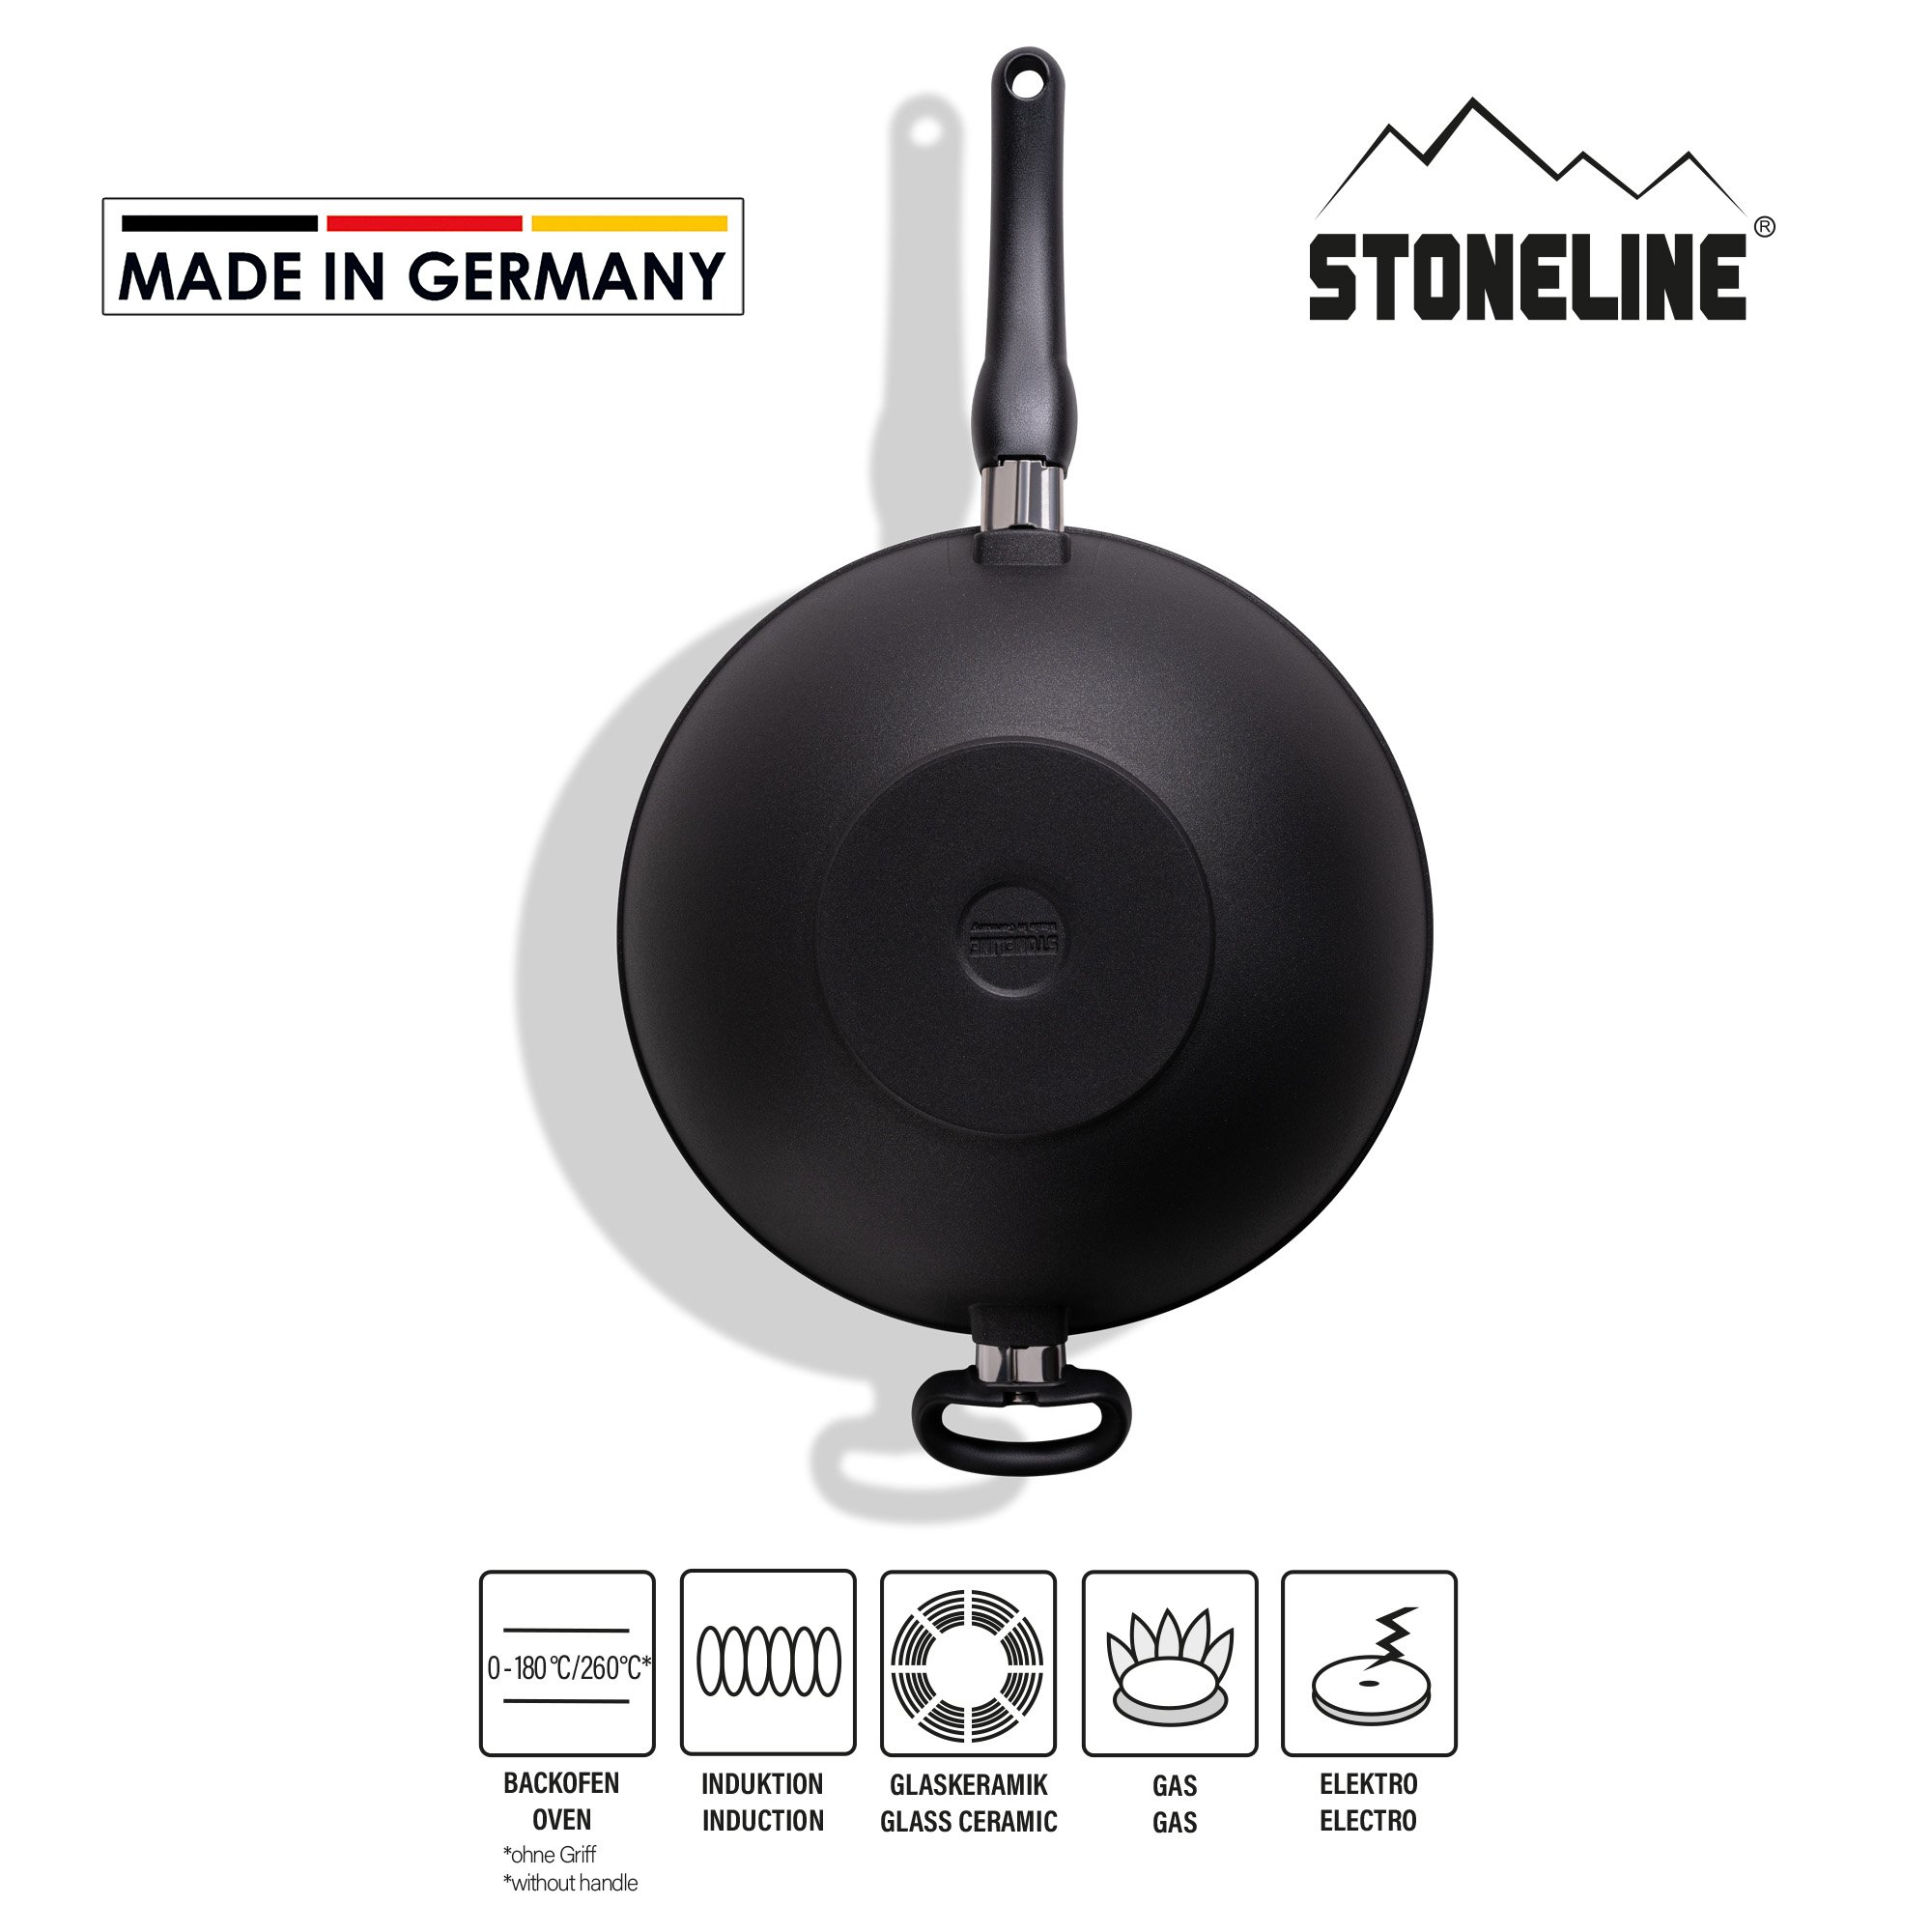 STONELINE® Wok 32 cm, Manico Removibile, Padella Antiaderente MADE IN GERMANY